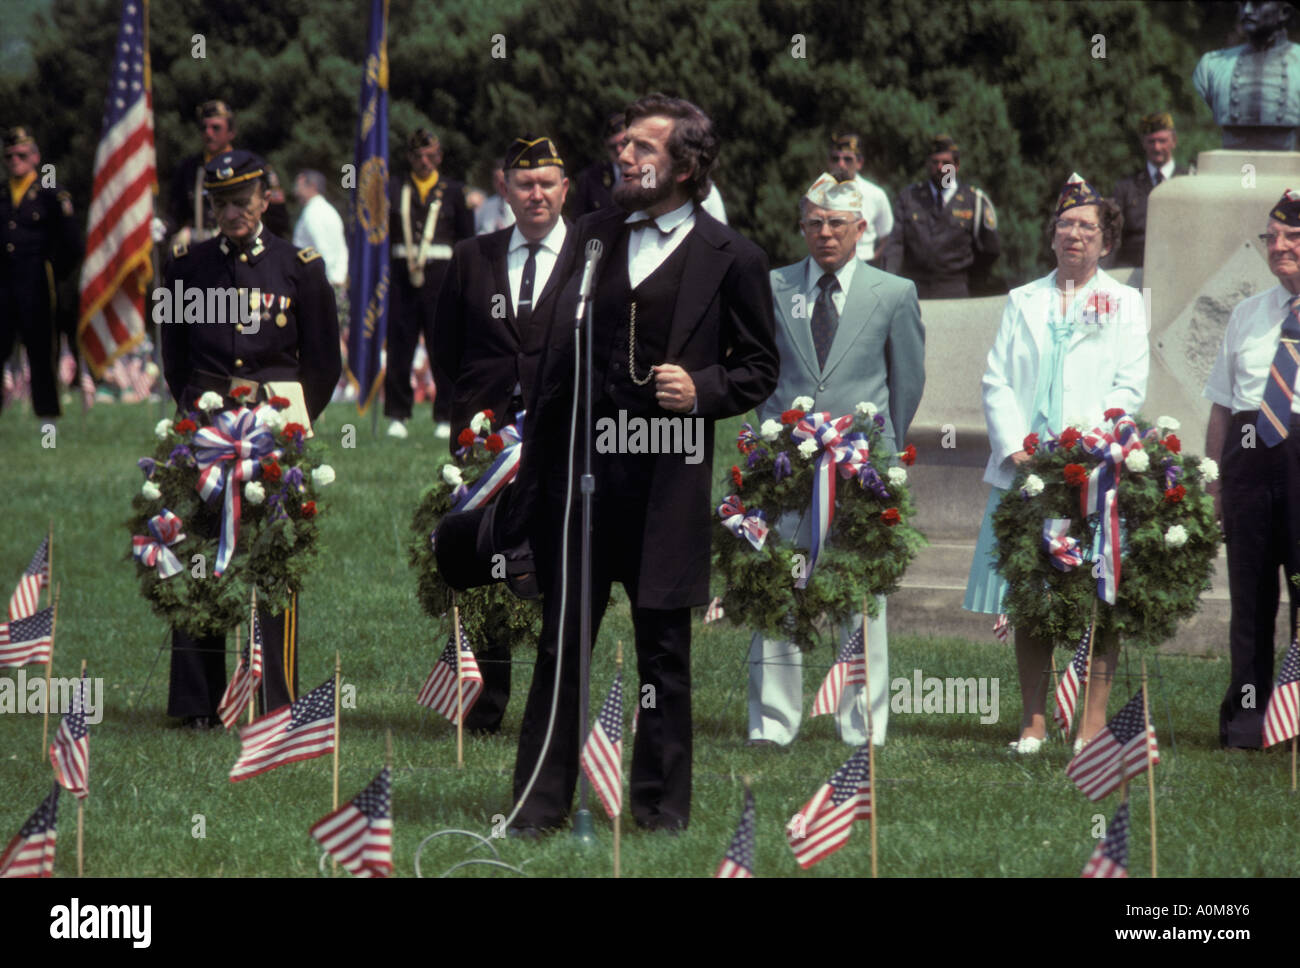 Abraham Lincoln Schauspieler Reenactor 4th of July Memorial Day Feier in Friedhof Friedhof Stockfoto